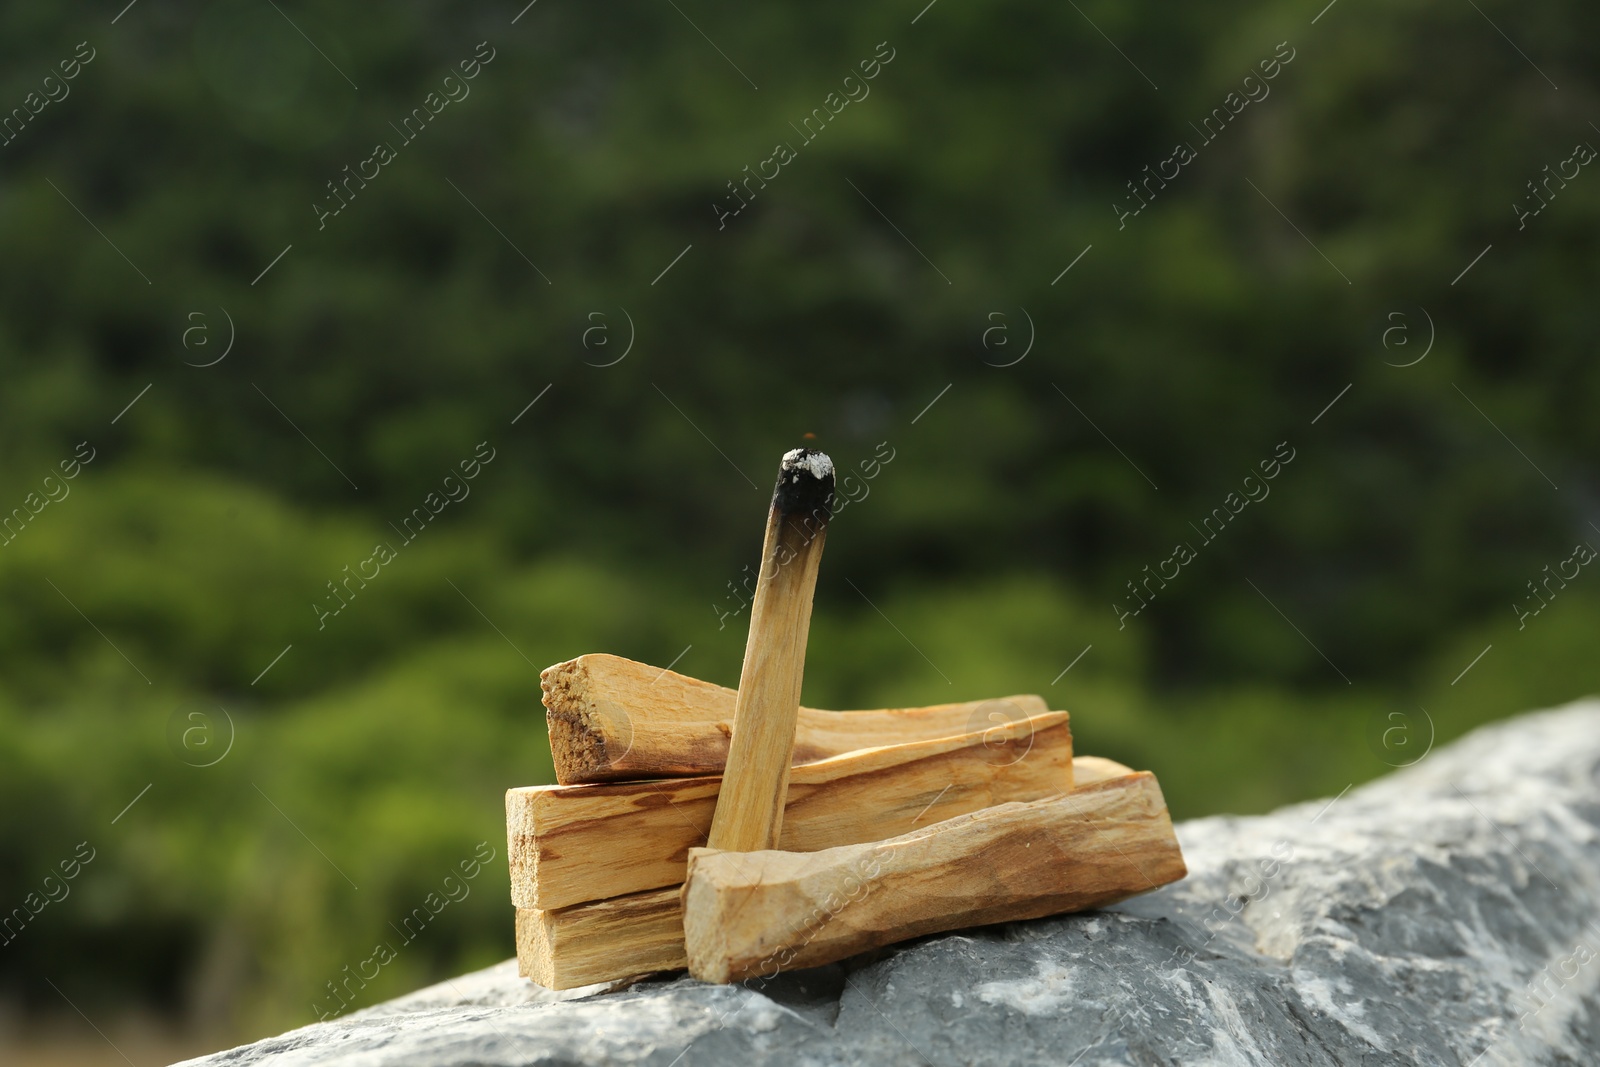 Photo of Burning palo santo stick on stone surface outdoors, closeup